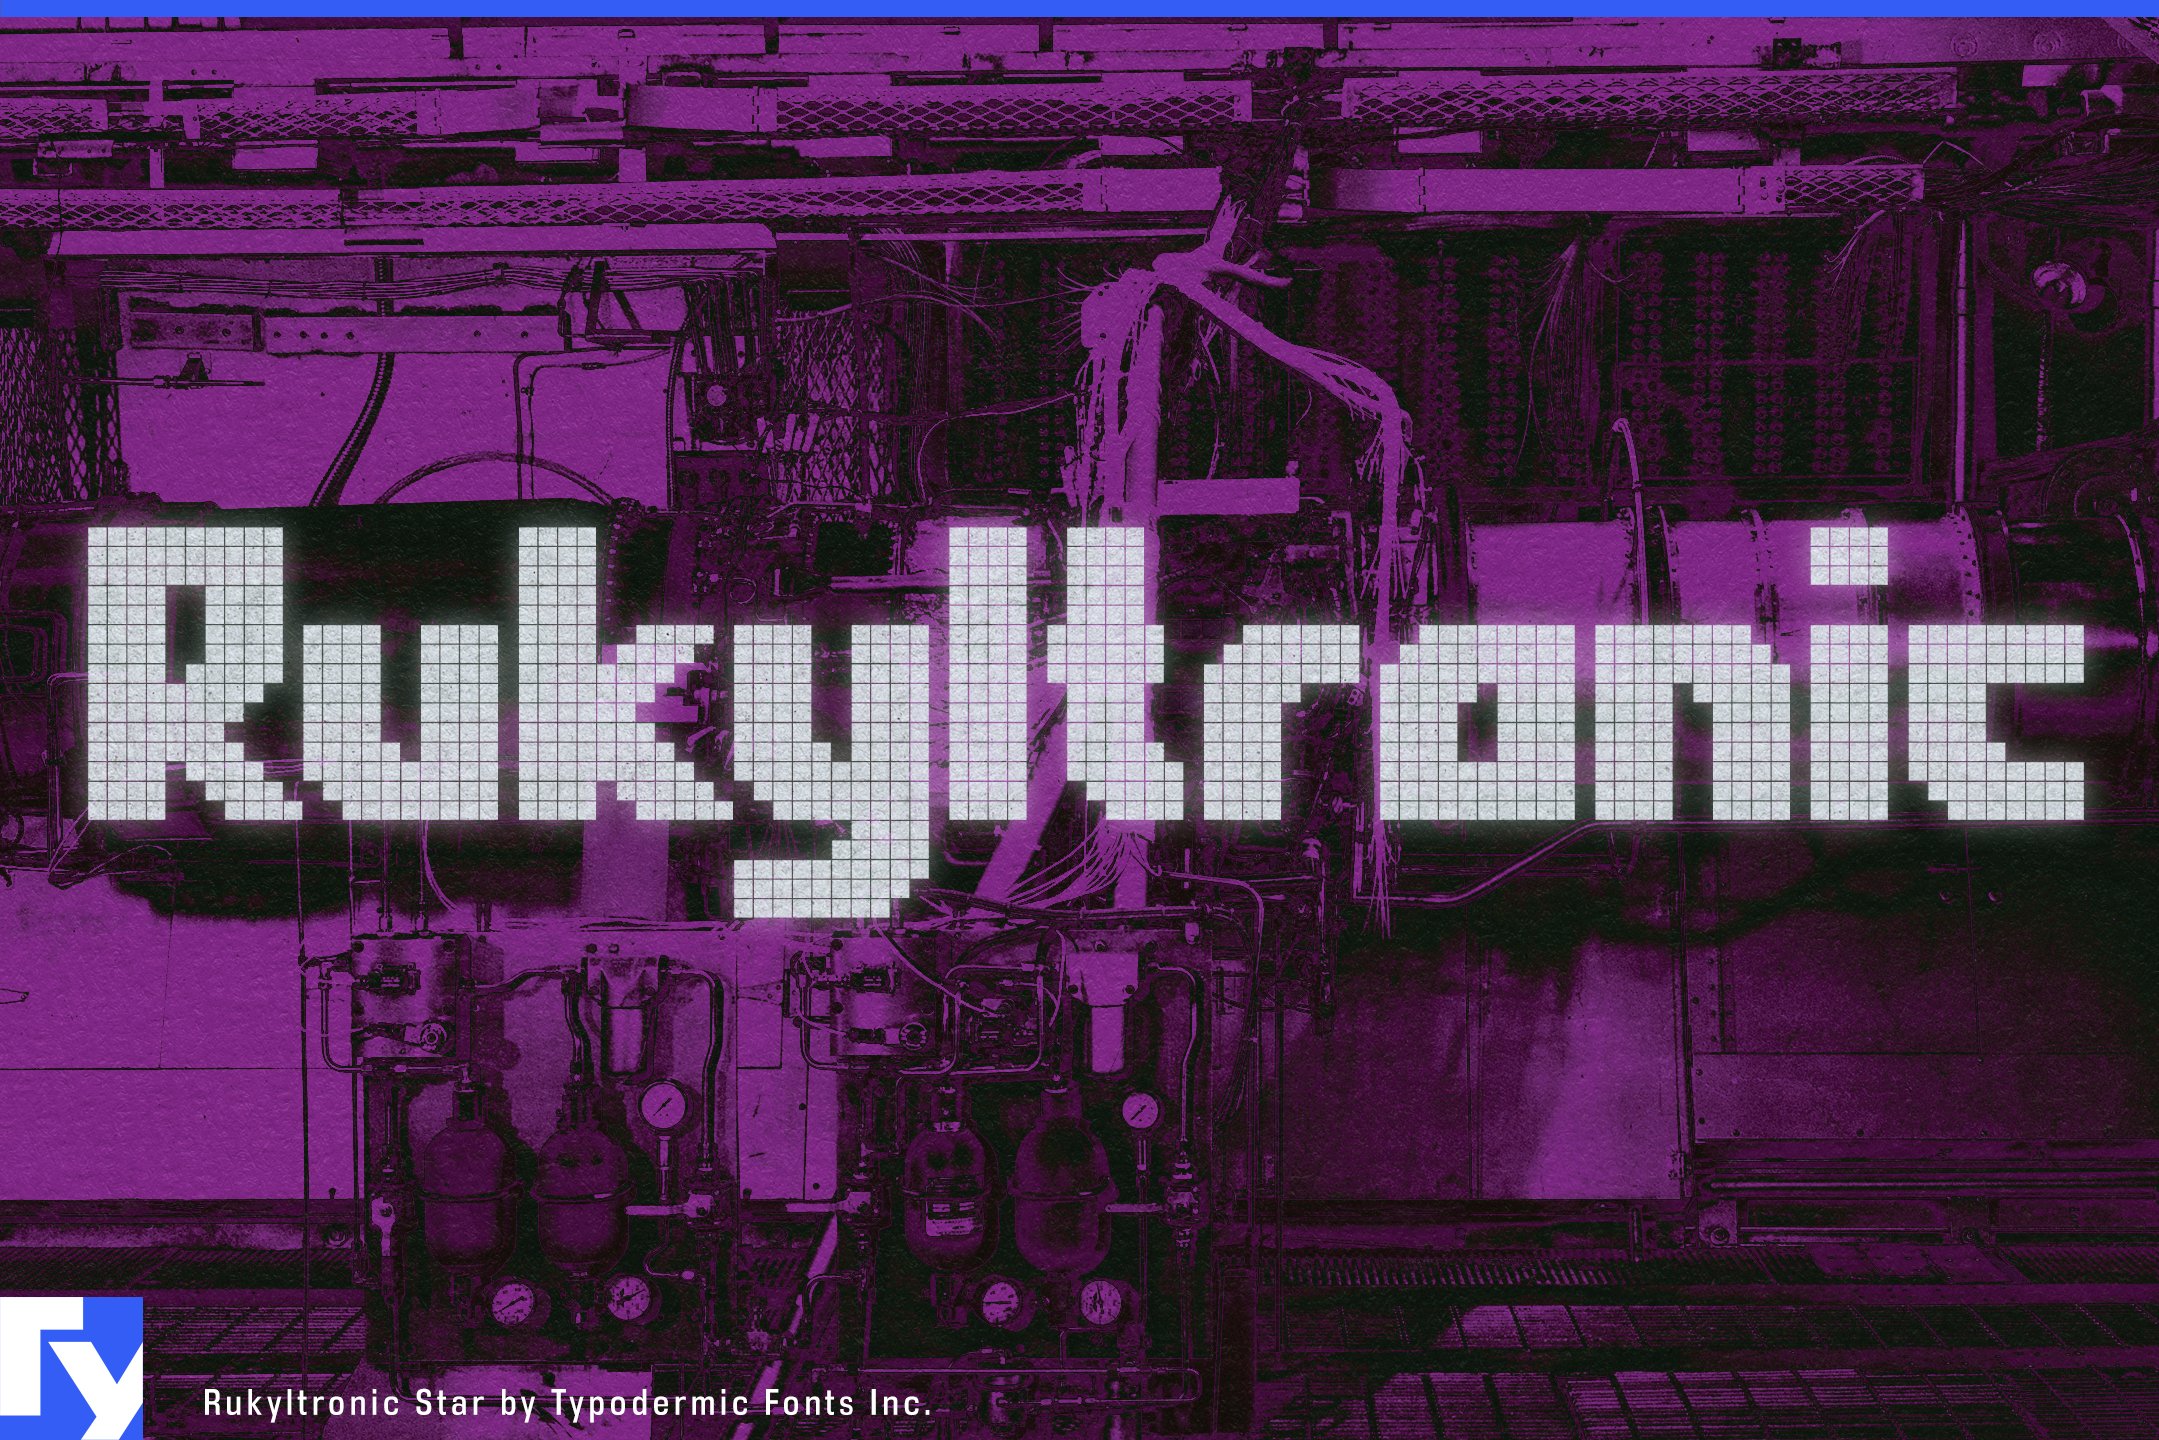 Rukyltronic cover image.